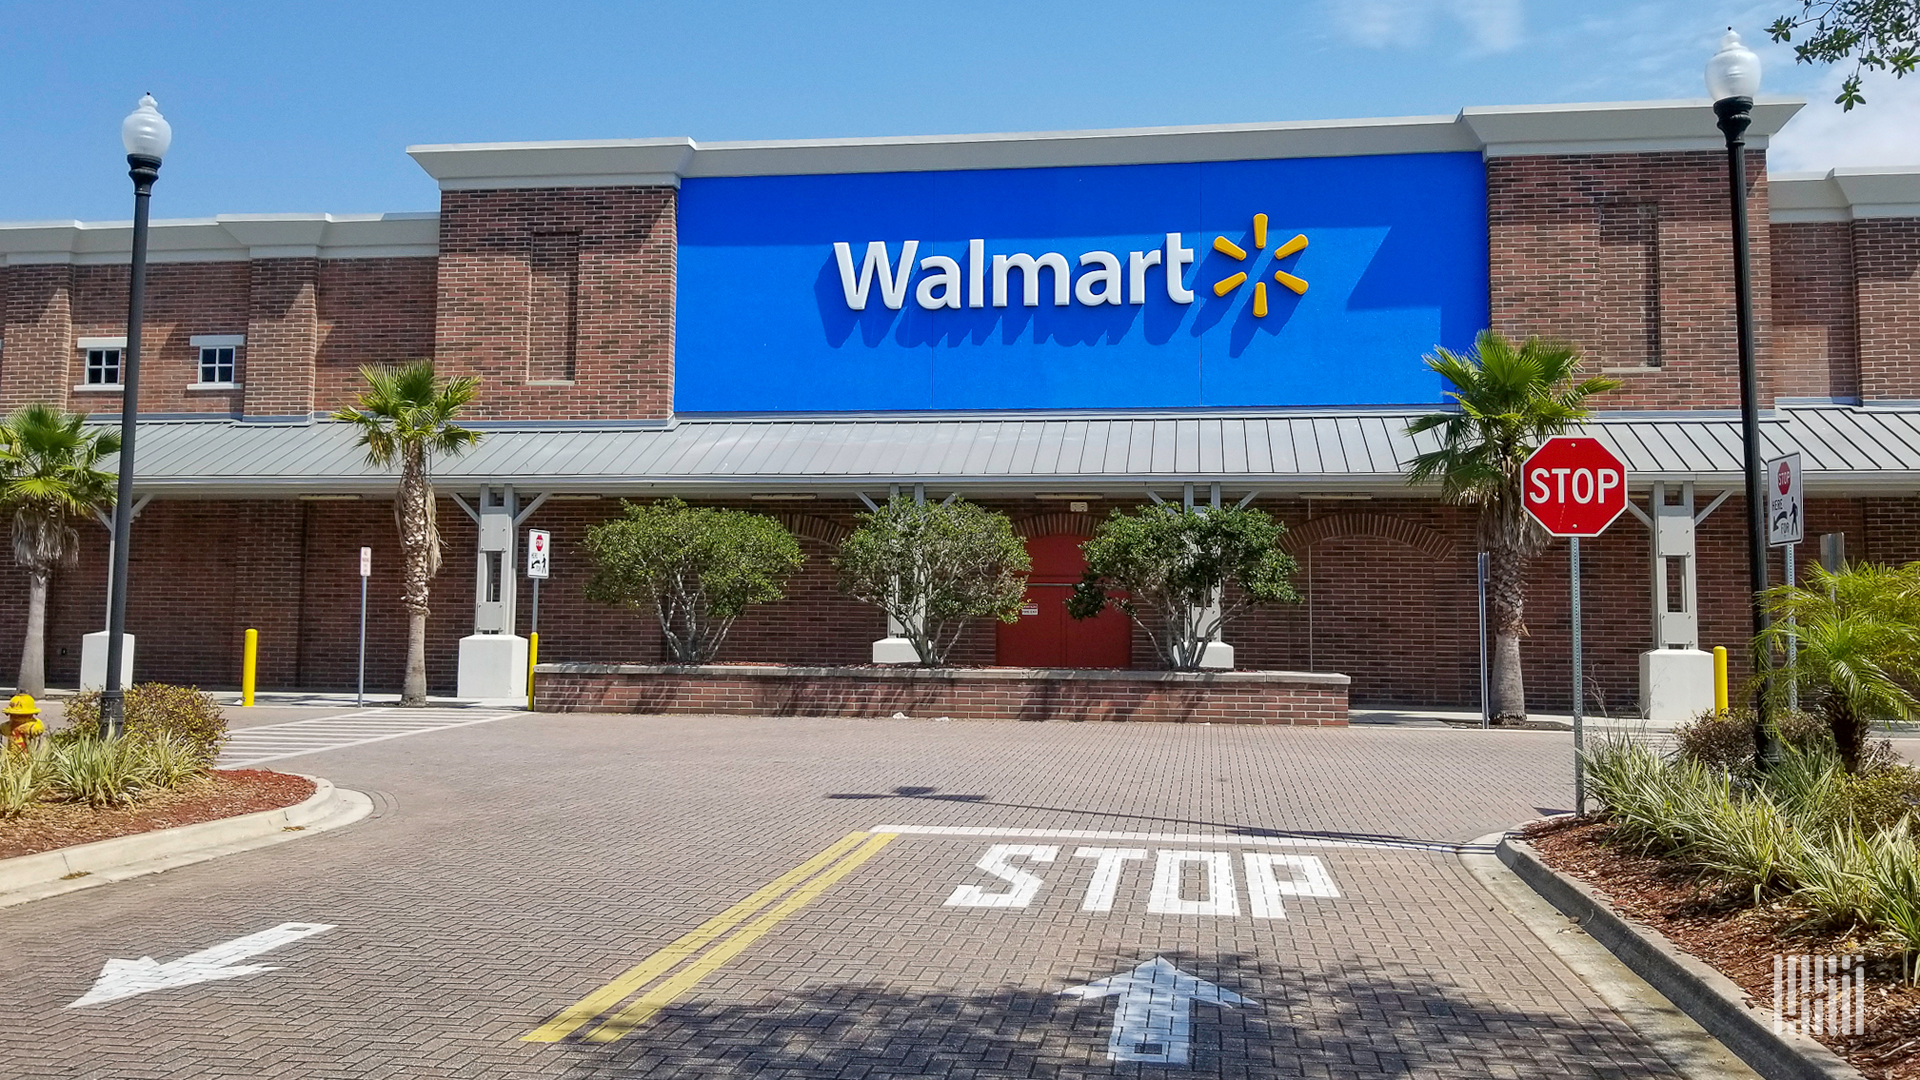 Walmart back in Shipper of Choice top 25 at No. 10